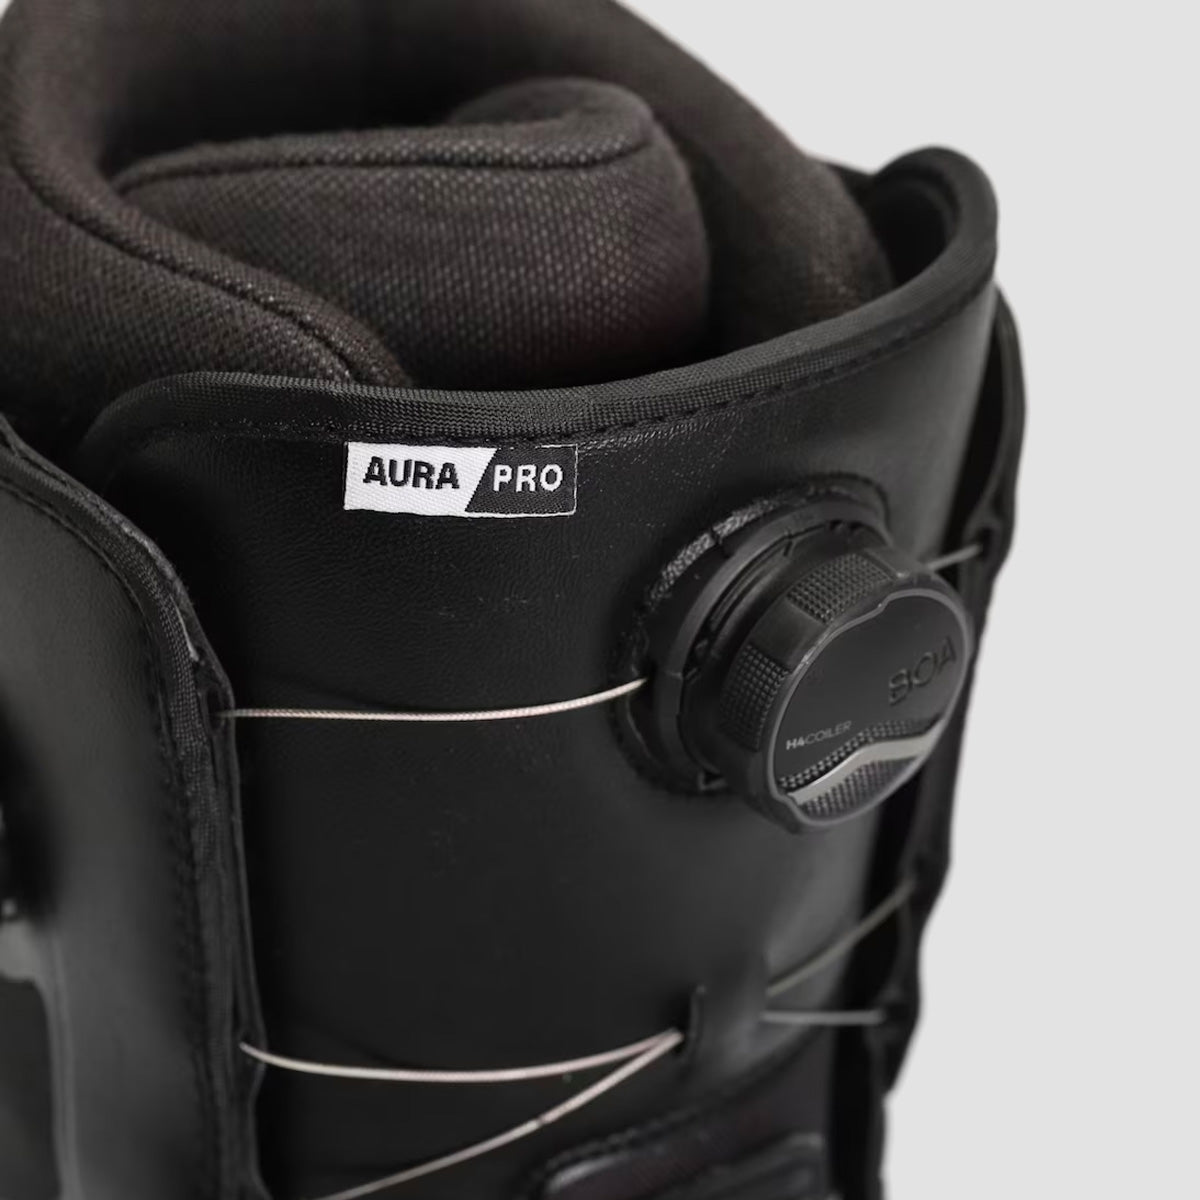 Vans Aura Pro Snowboard Boots Black/White